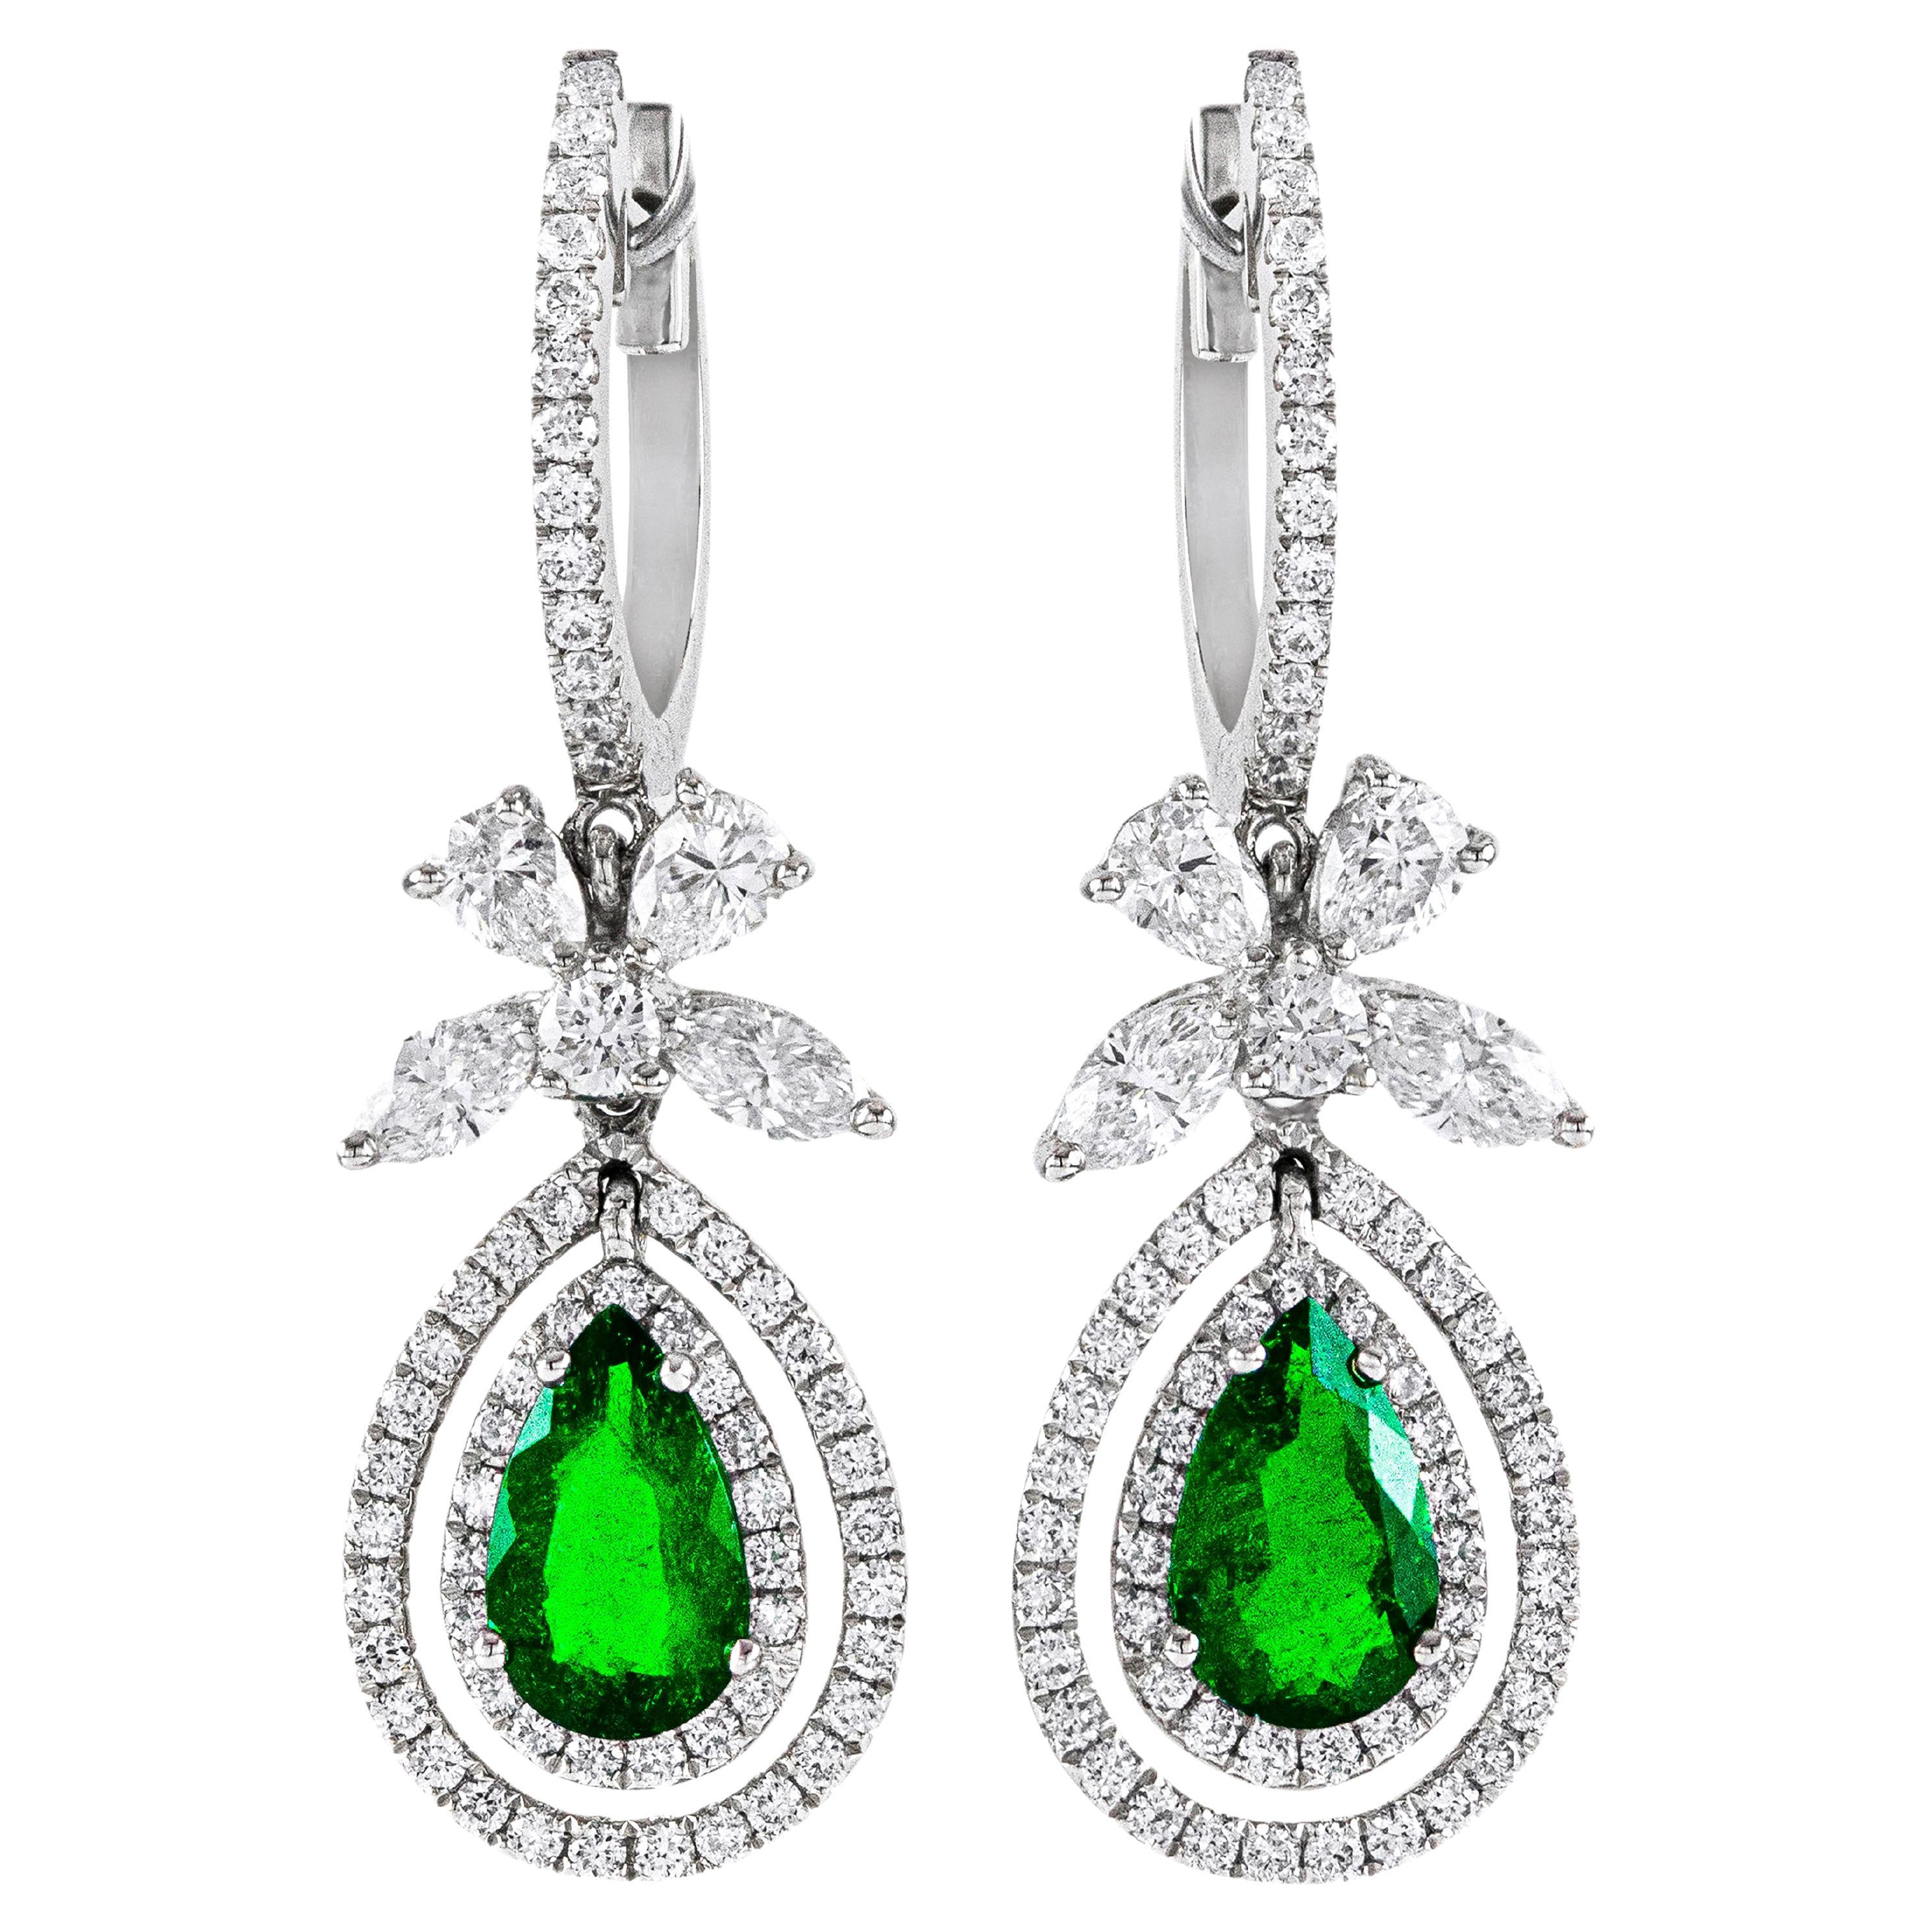 1.14 Carats Total Pear Shape Green Emerald with Diamond Dangle Earrings